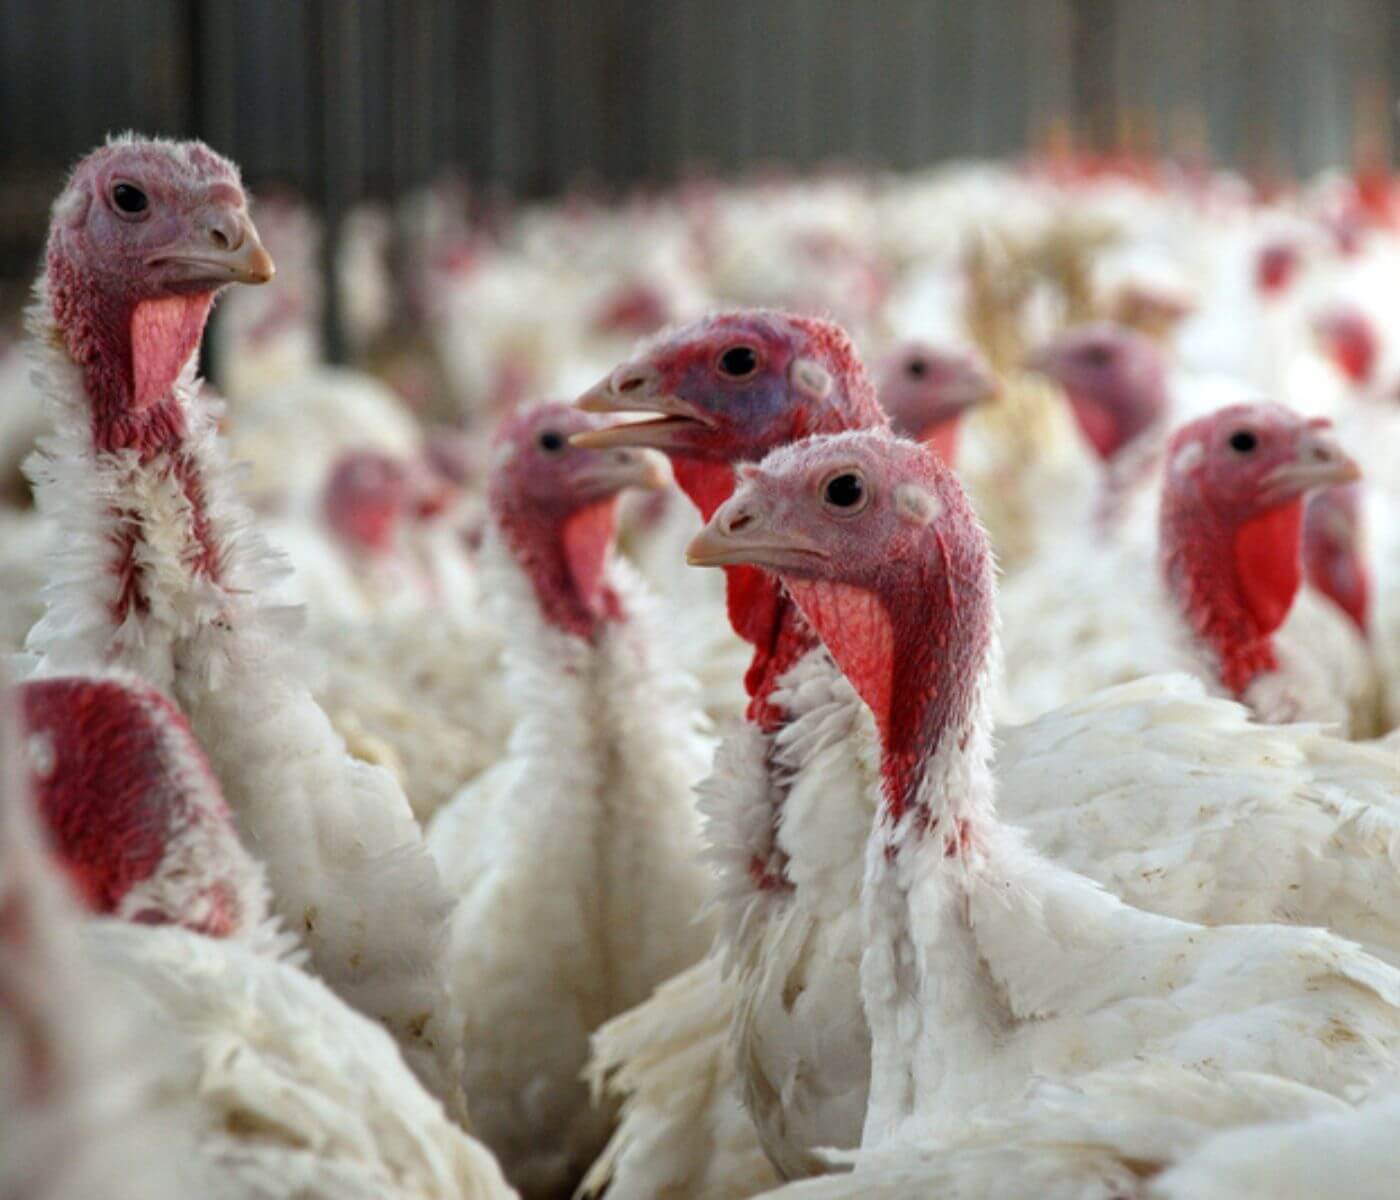 Romanian commercial turkey flocks affected by avian influenza